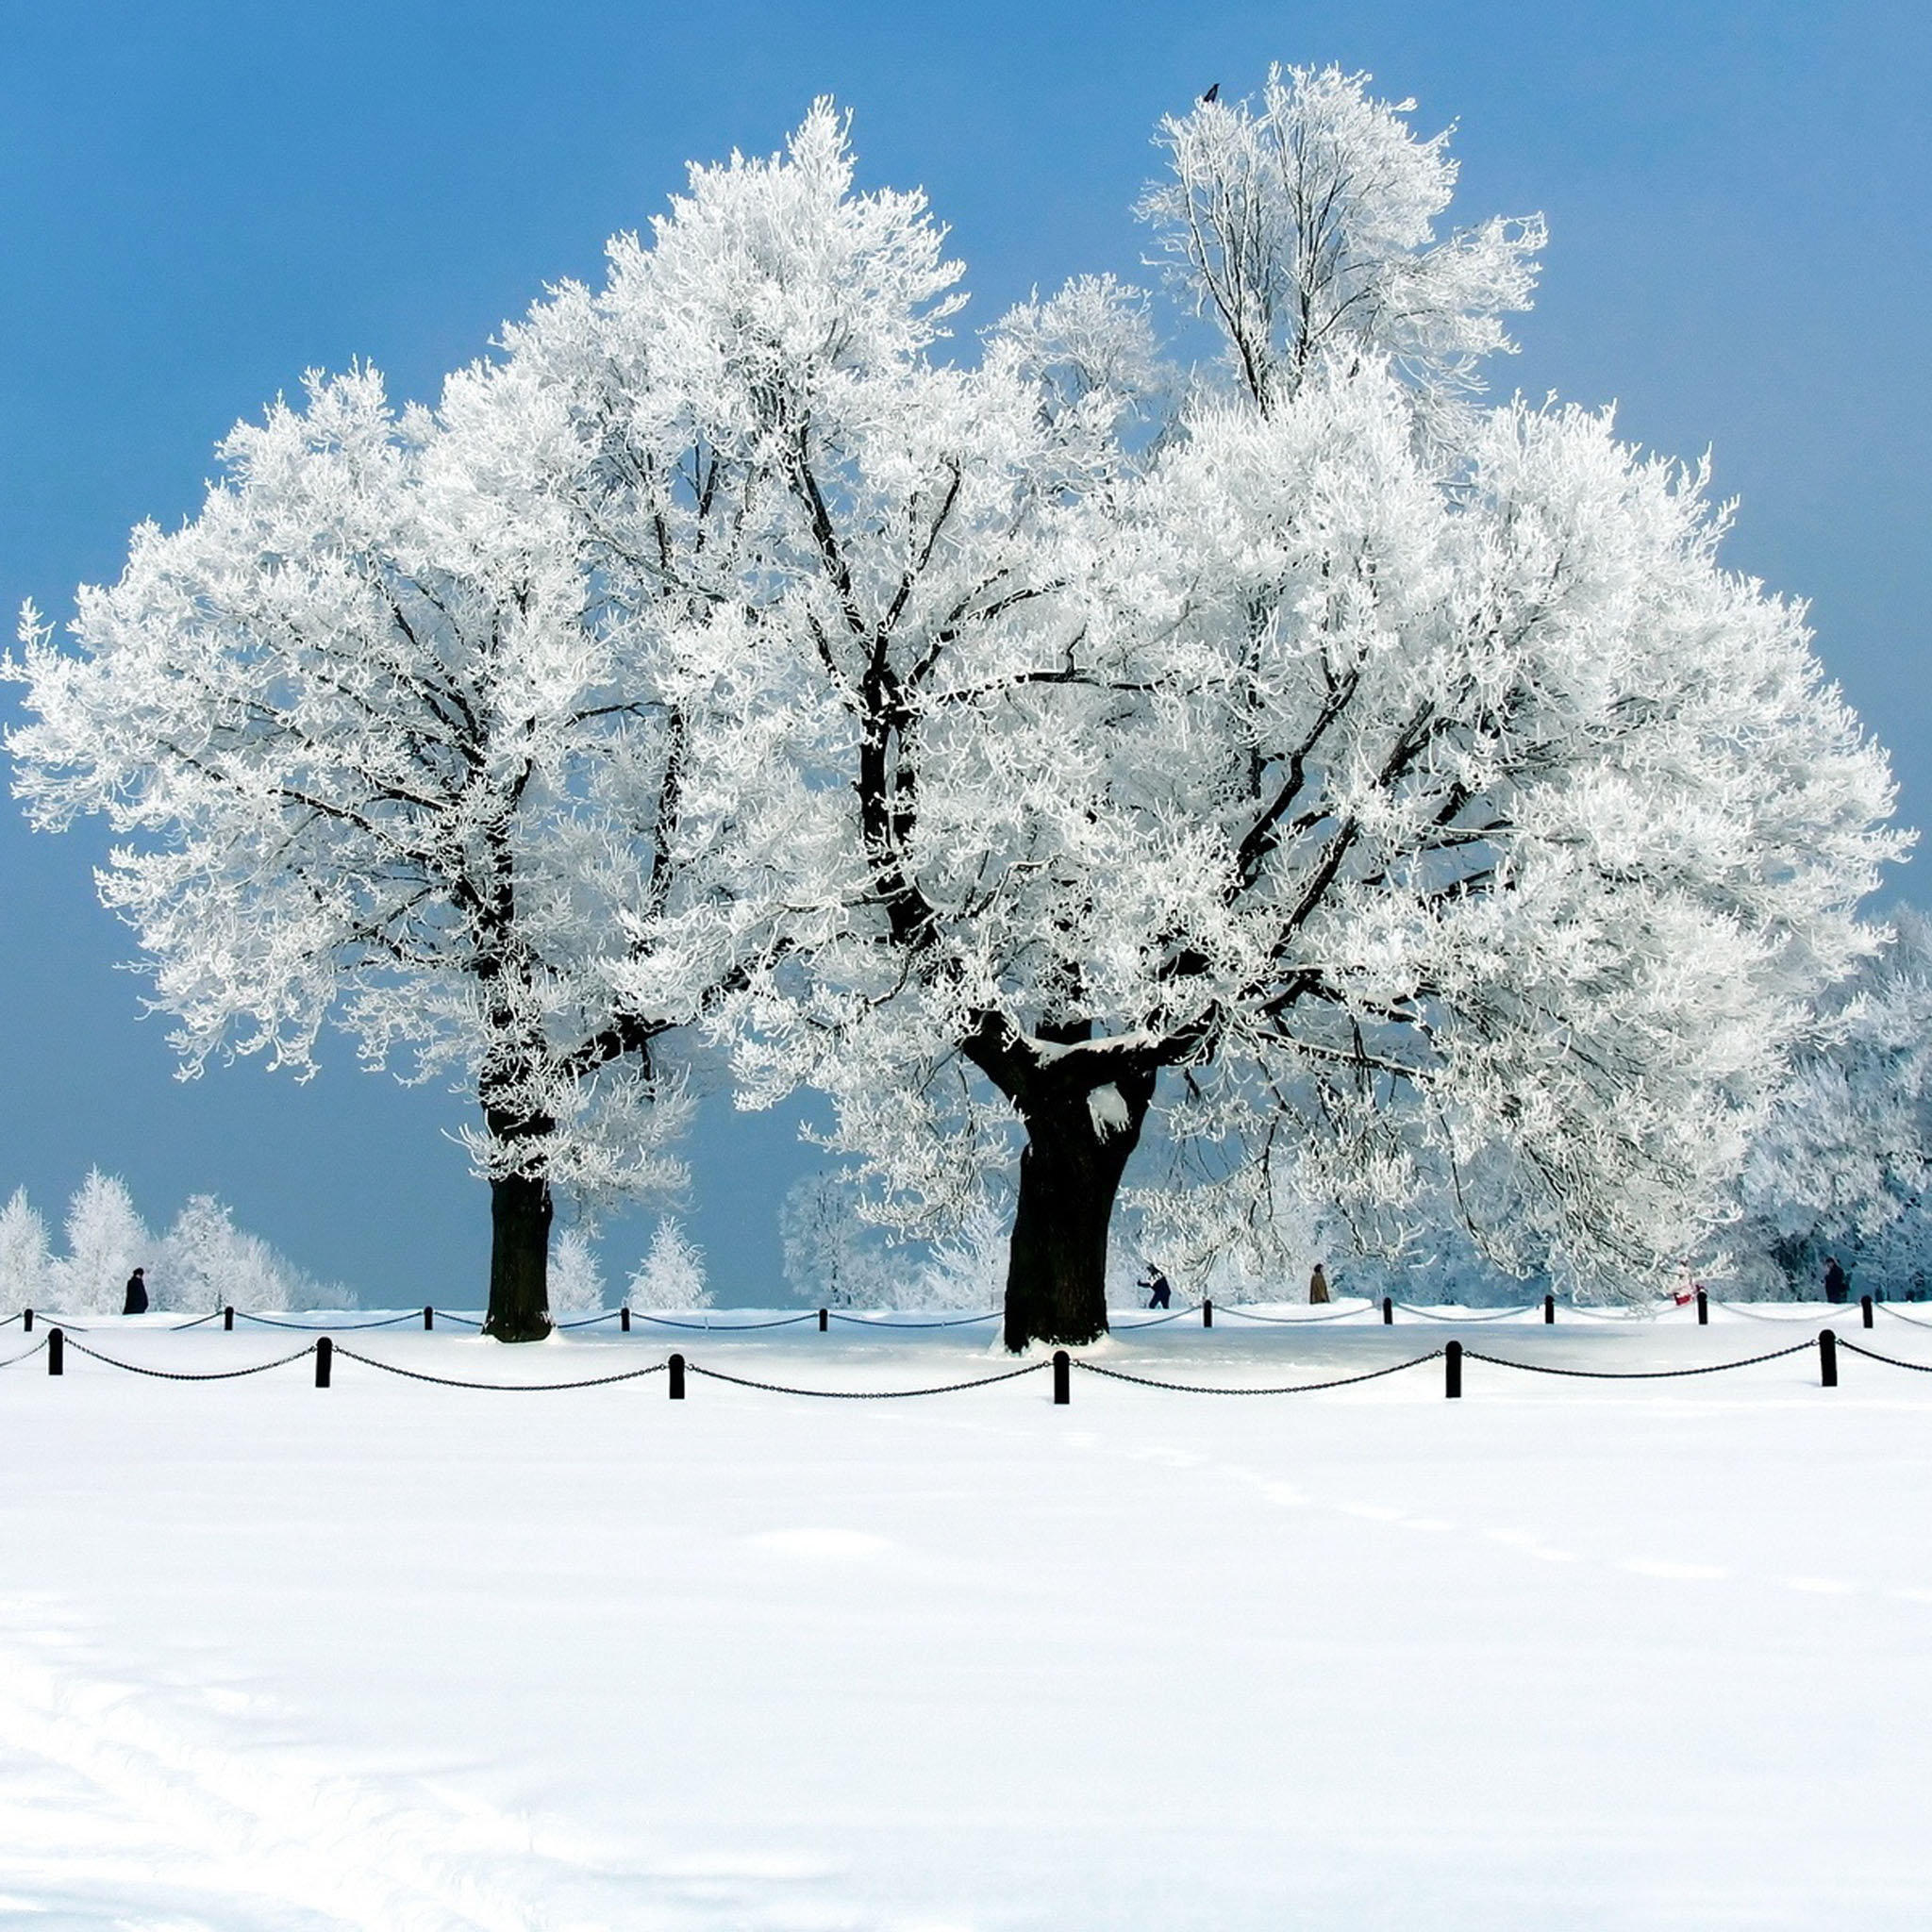 iPad Wallpaper Beautiful Winter Snow Scenes Natural Scenery New